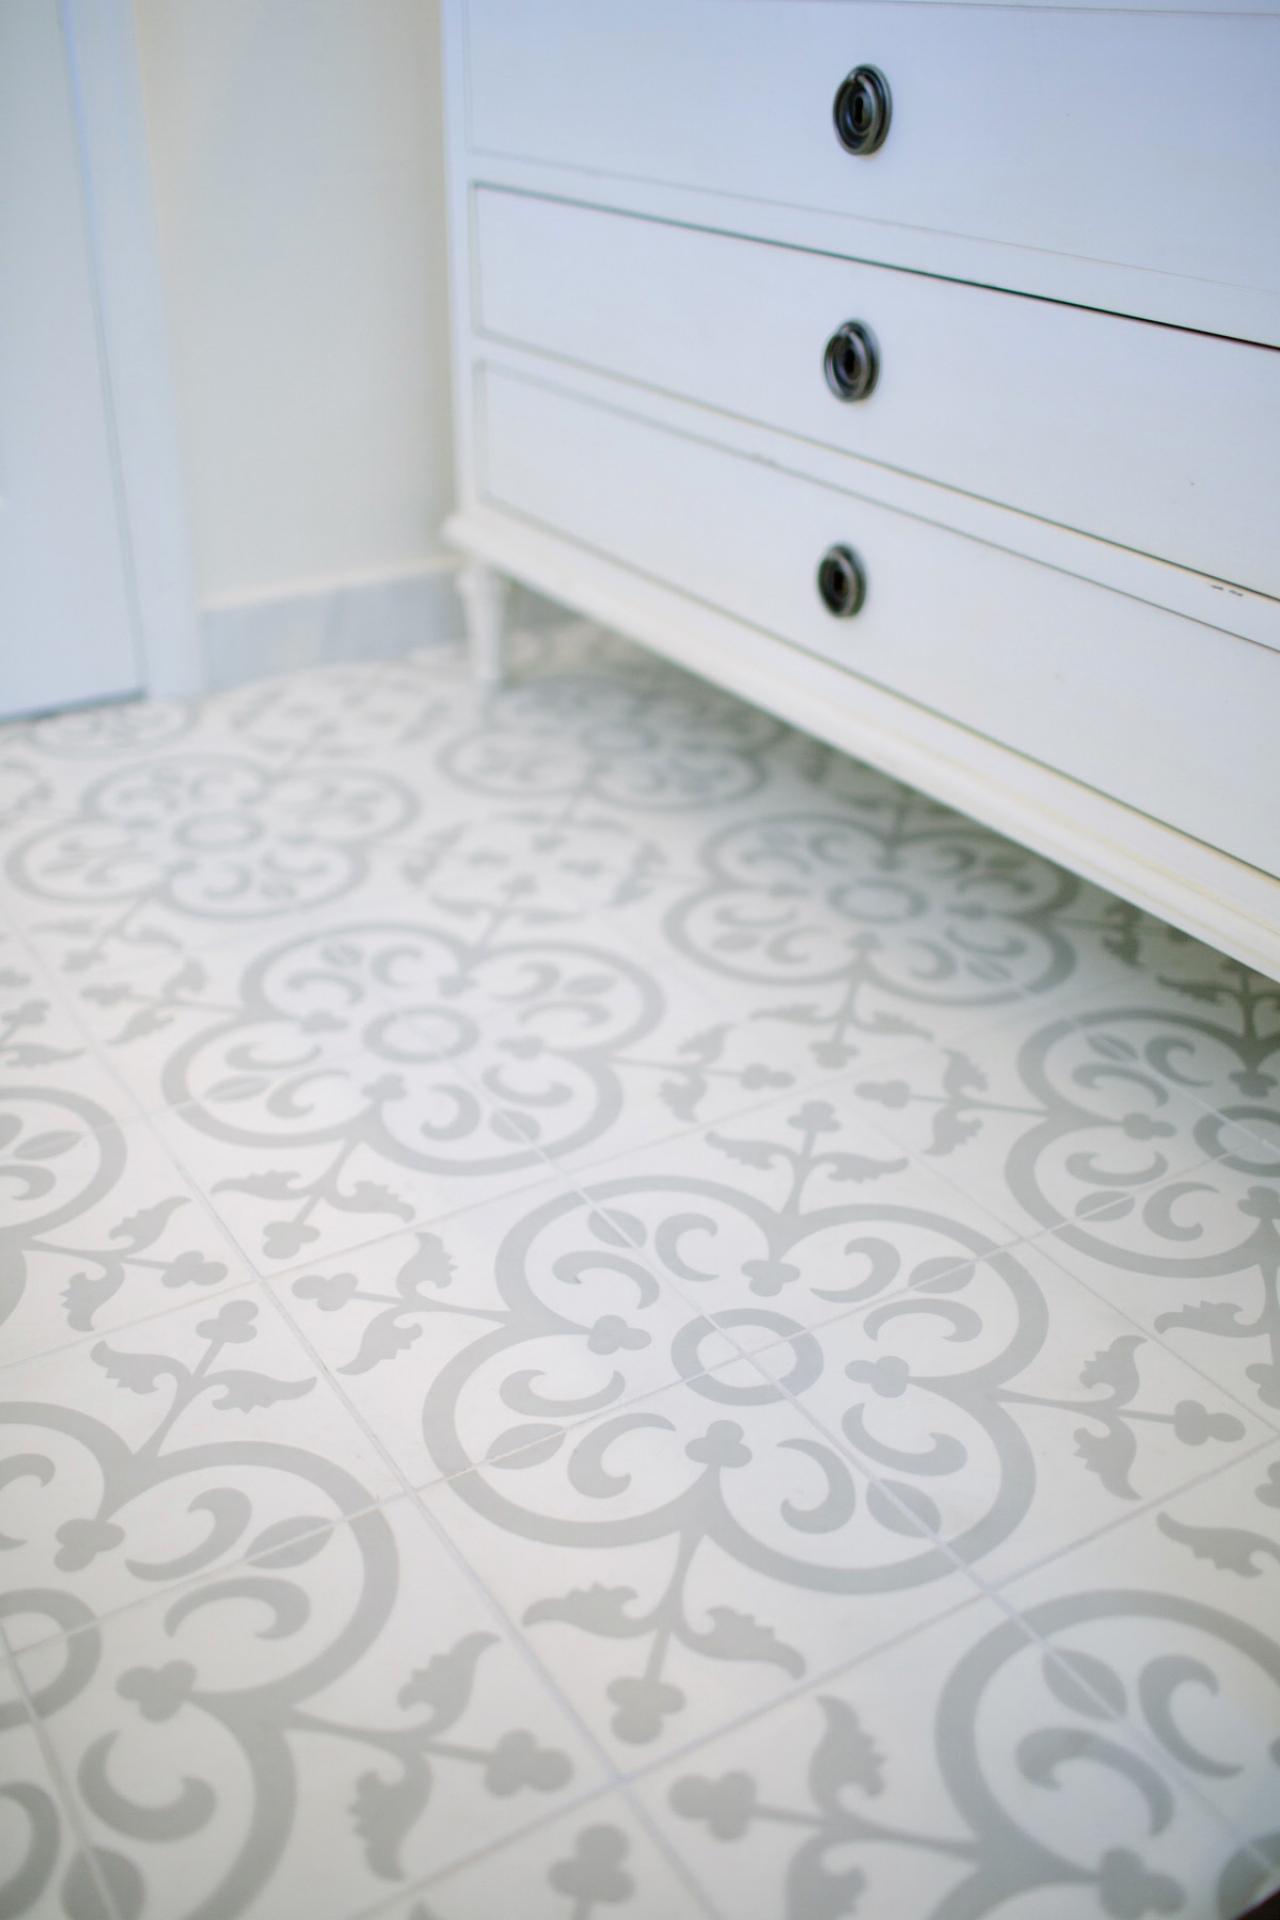 Average Cost To Install Tile Floor, Ceramic Floor Tile Cost Per Square Foot